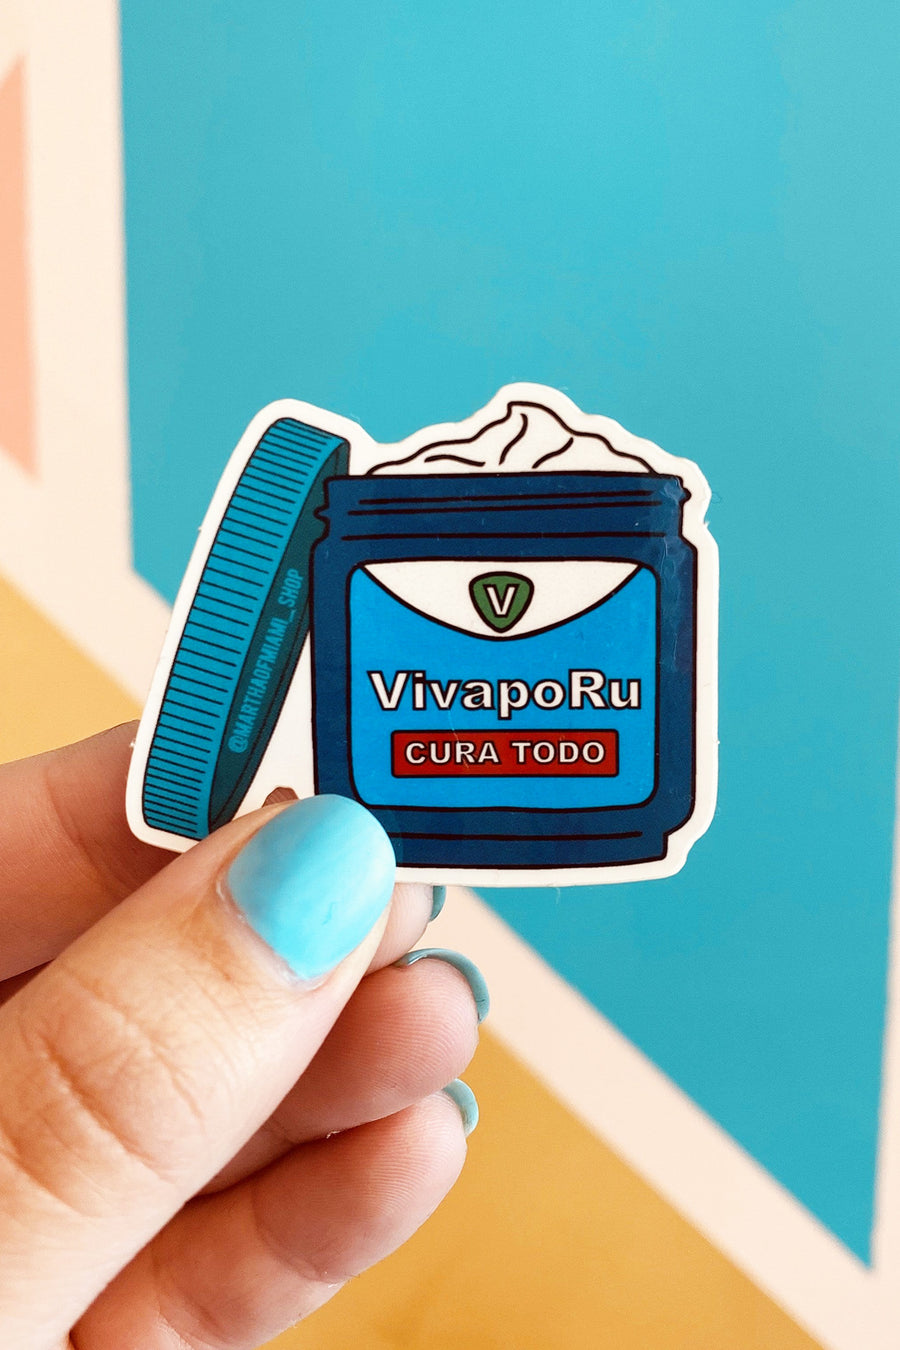 an image of a vivaporu sticker